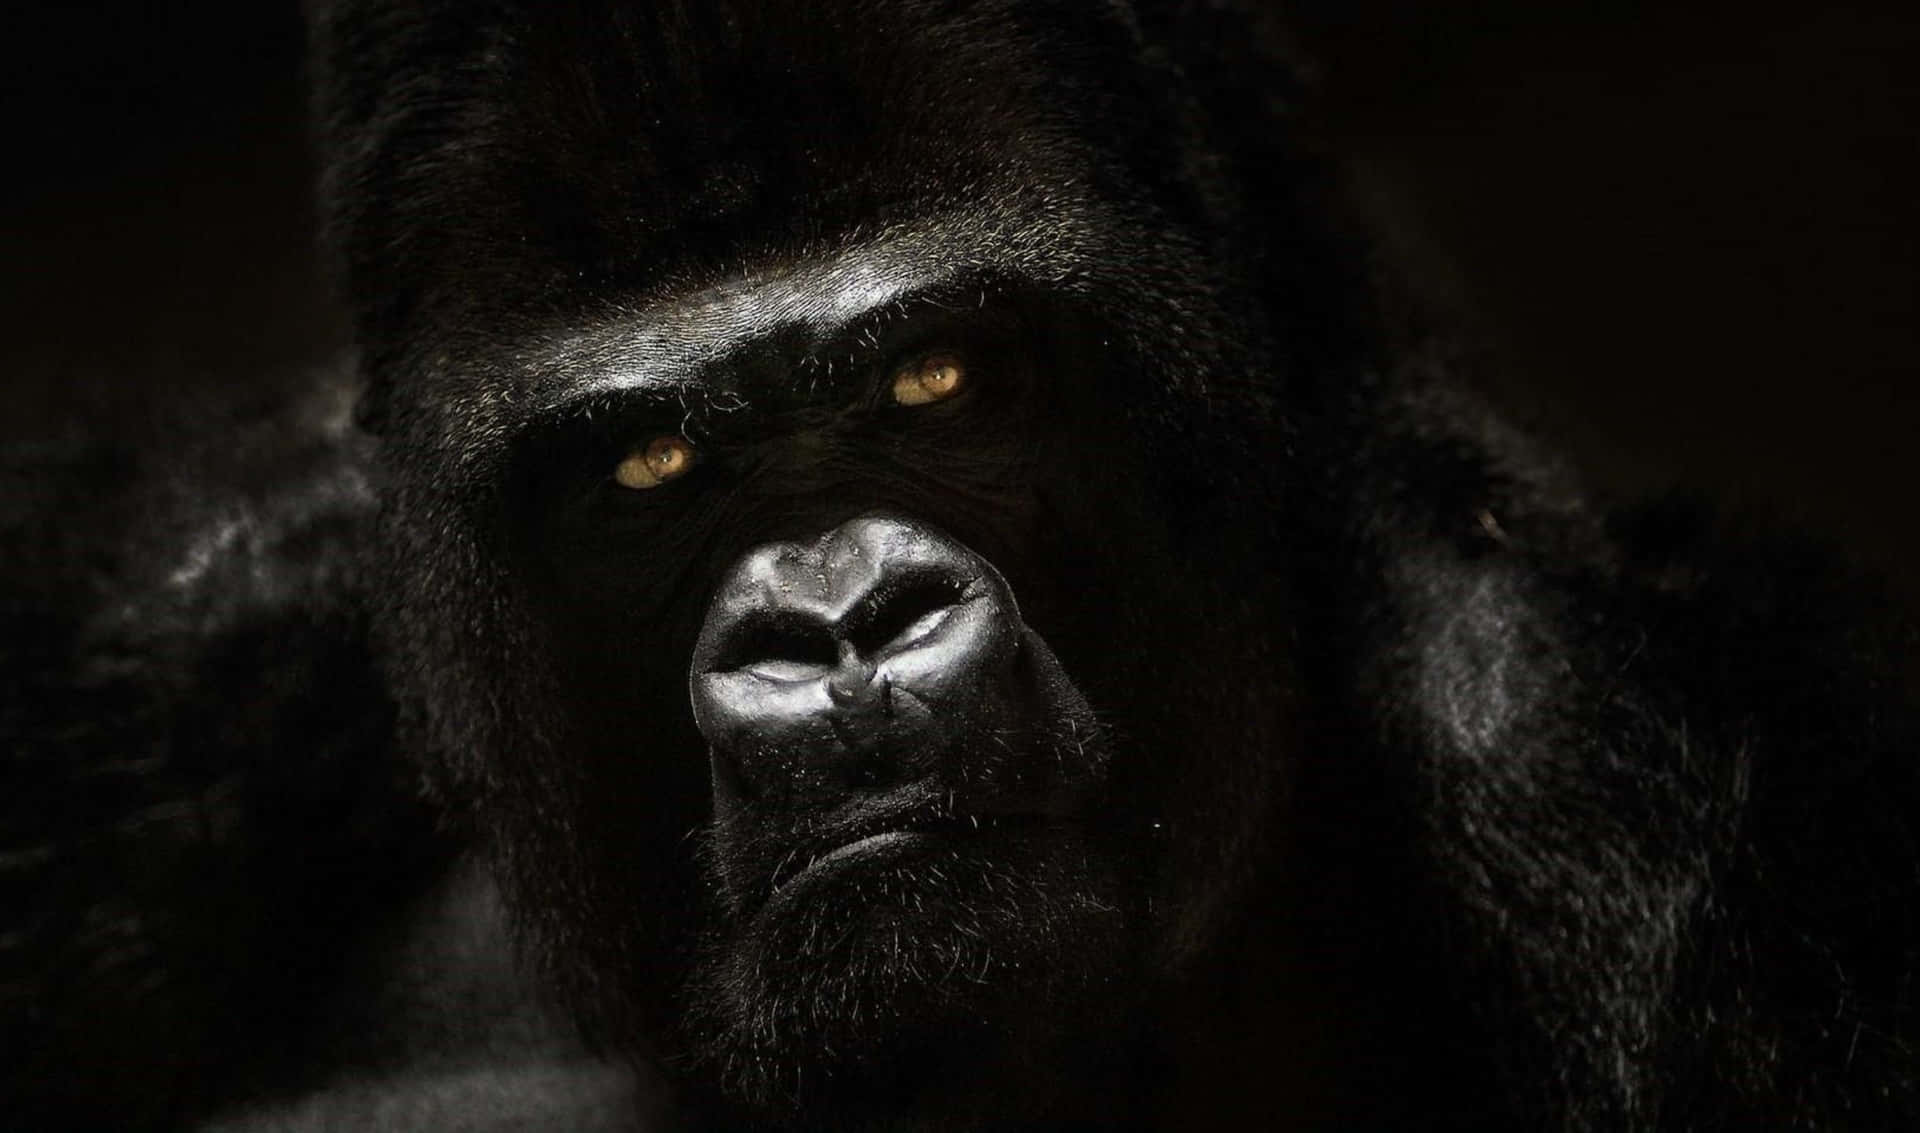 A large silverback gorilla on a black background